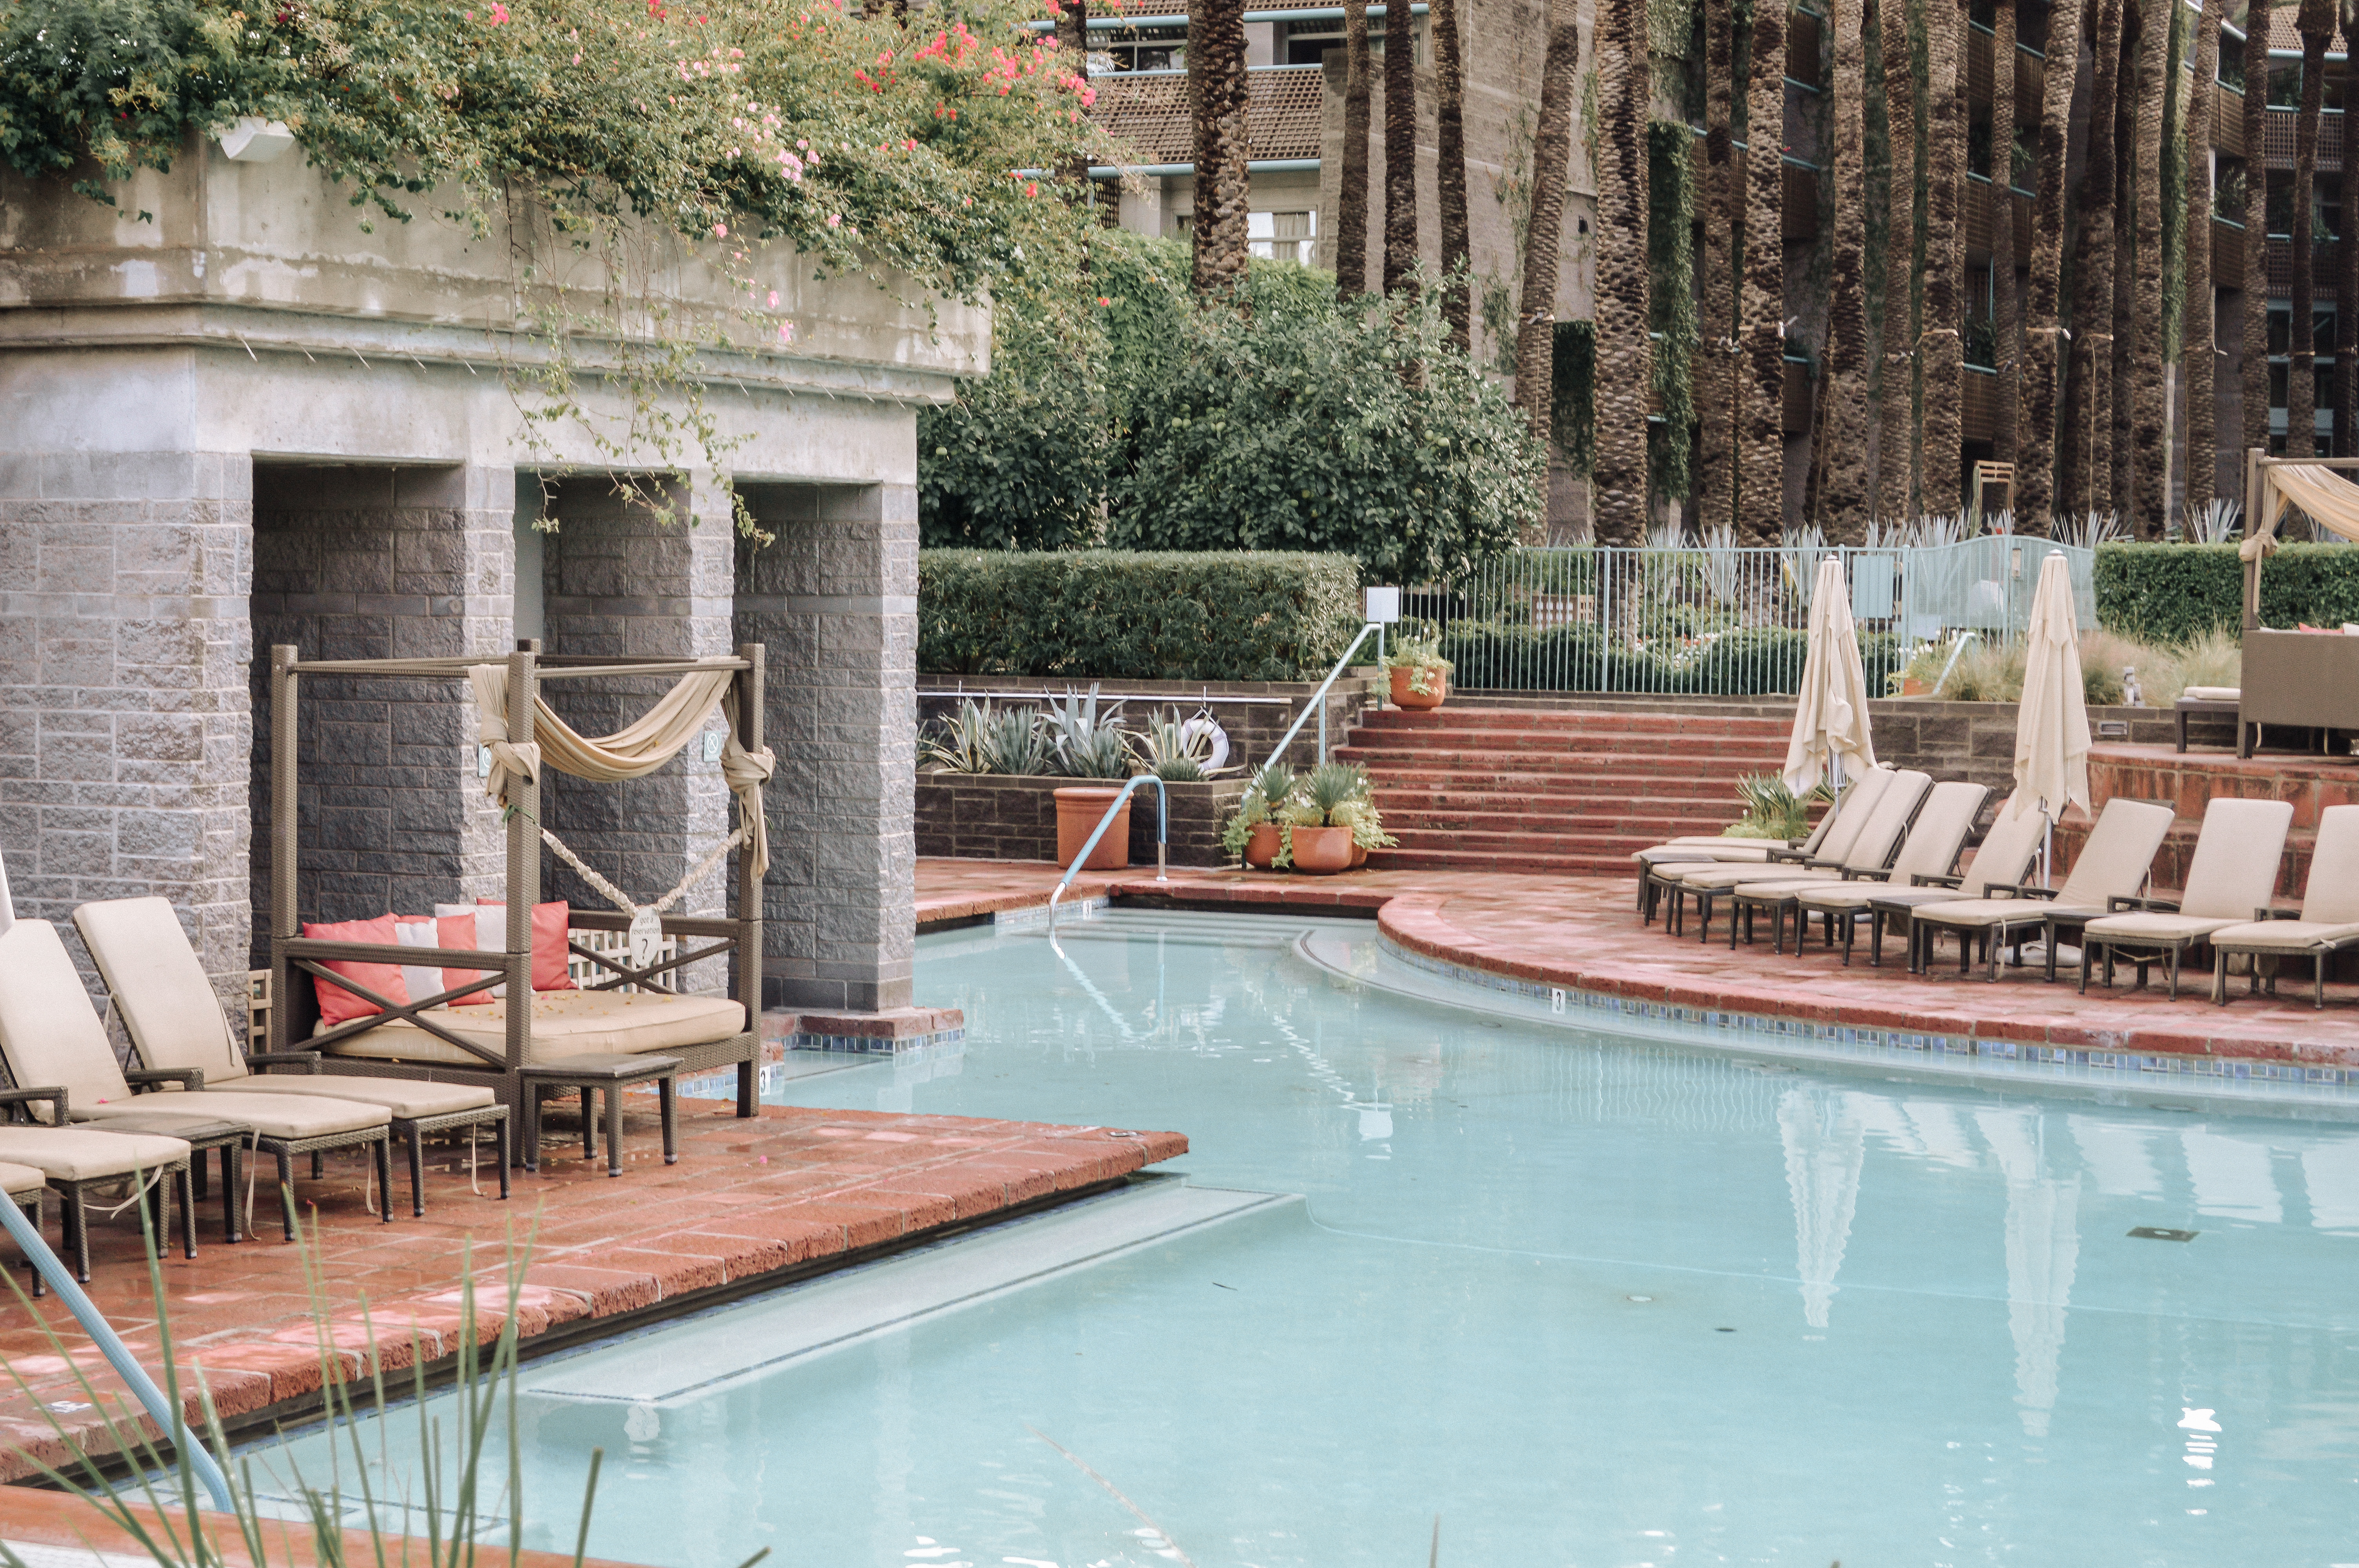 hyatt regency scottsdale resort and spa review featured by top Denver travel blog, All Things Lovely